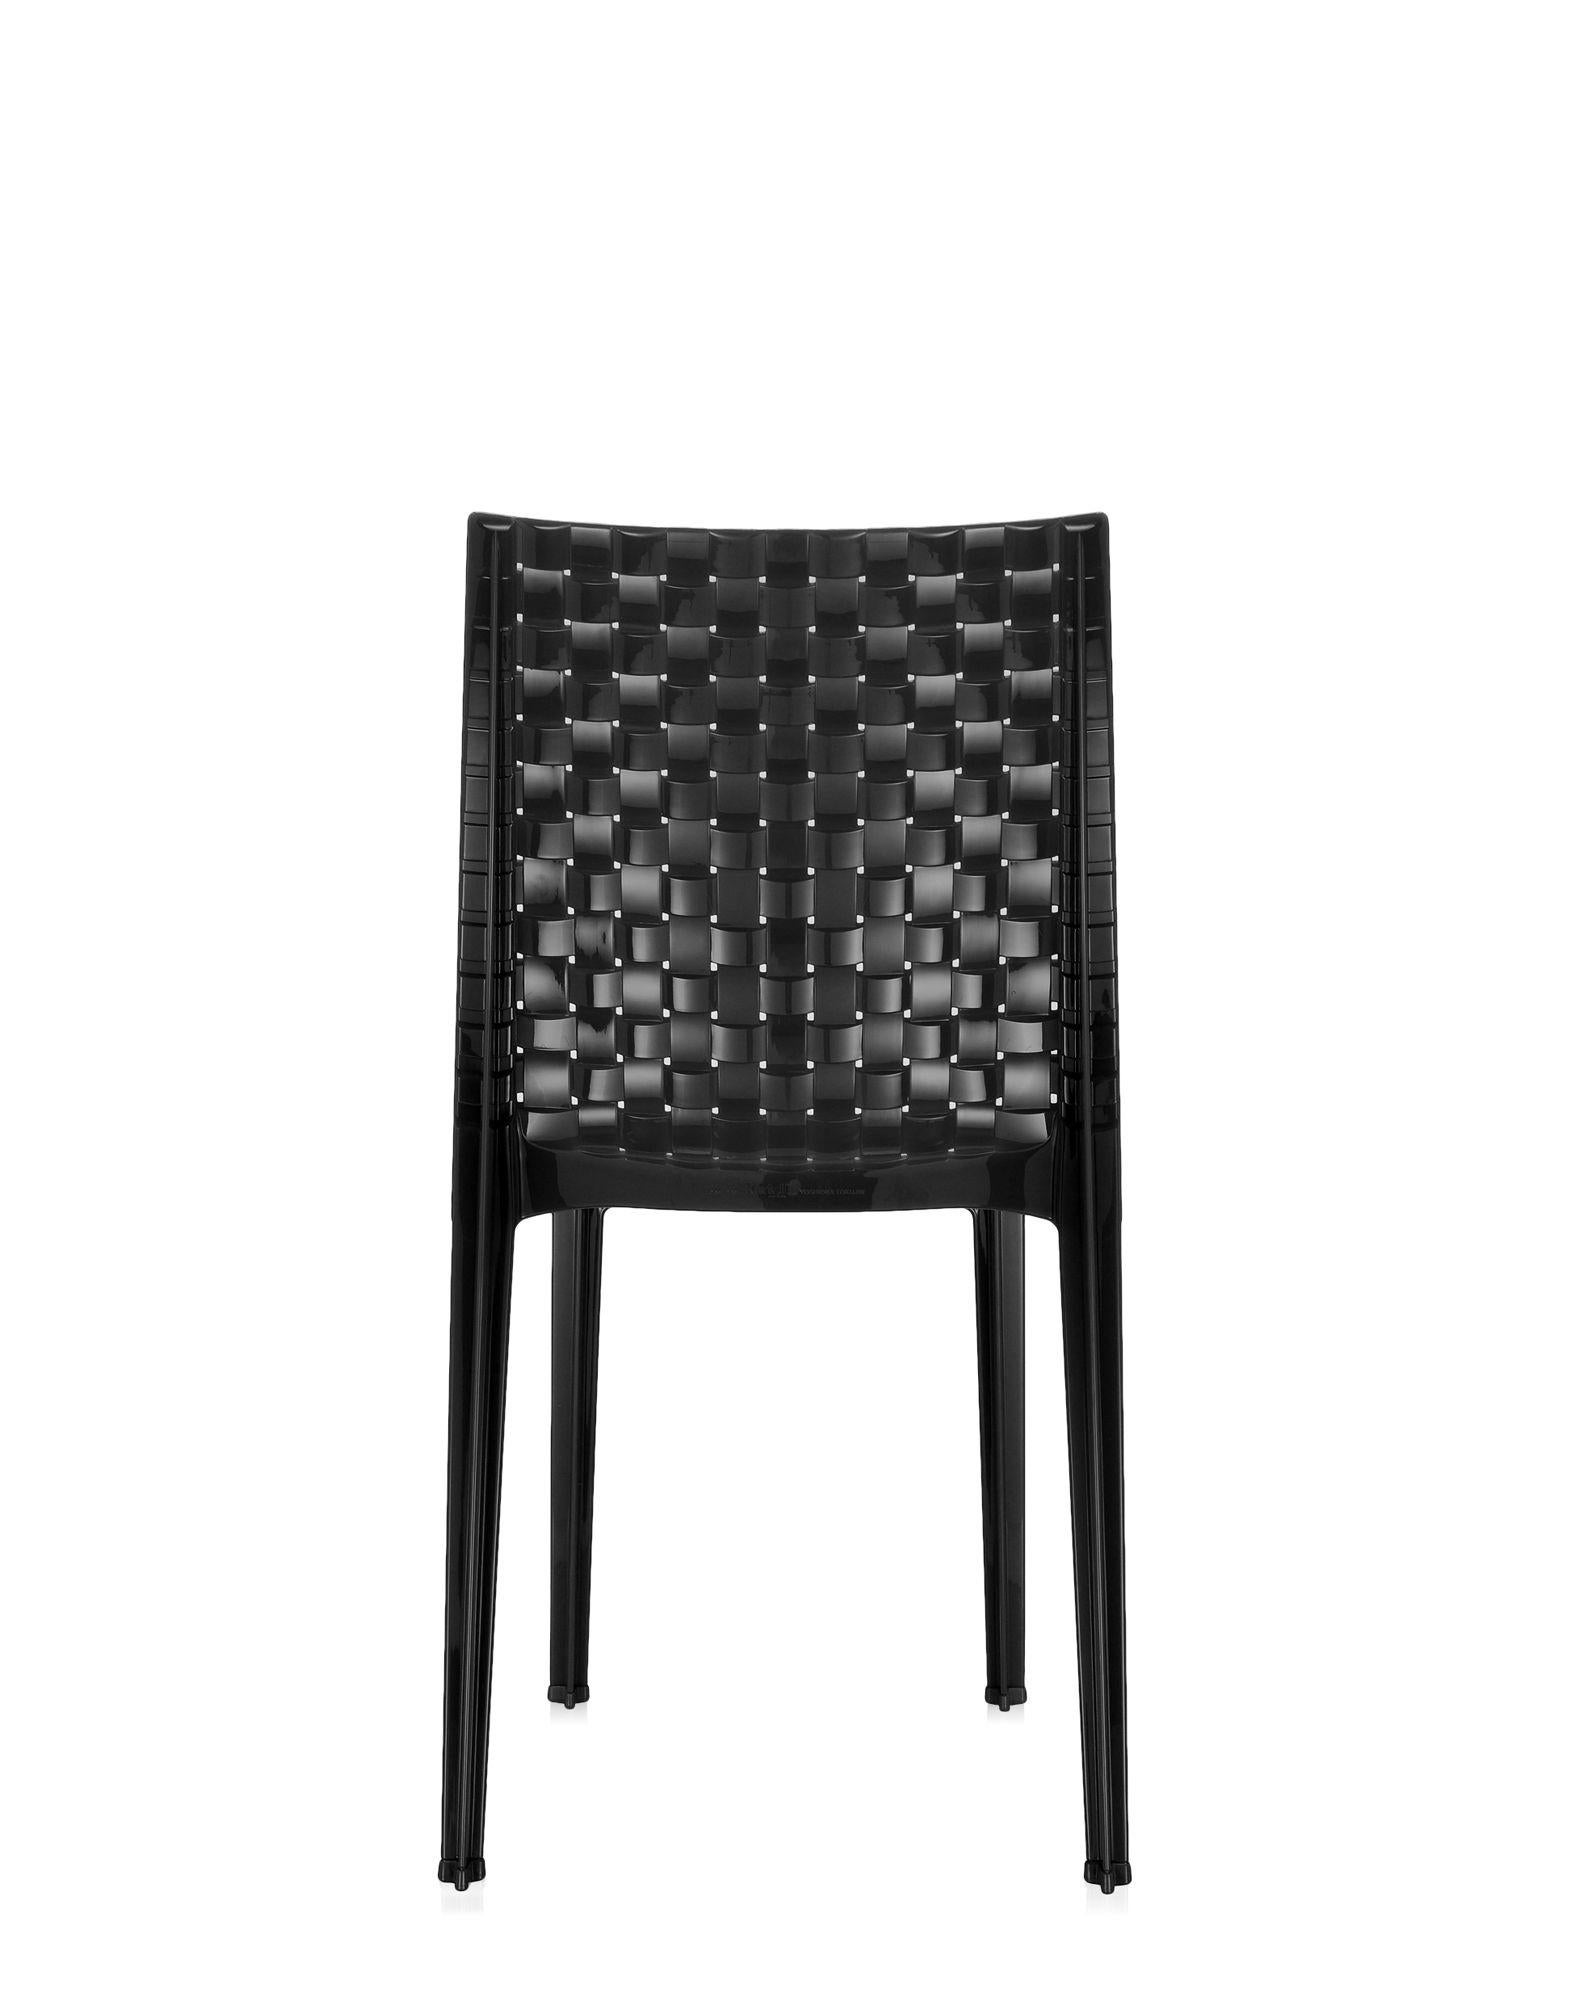 Contemporary Kartell Ami Ami Chair in Glossy Black by Tokujin Yoshioka